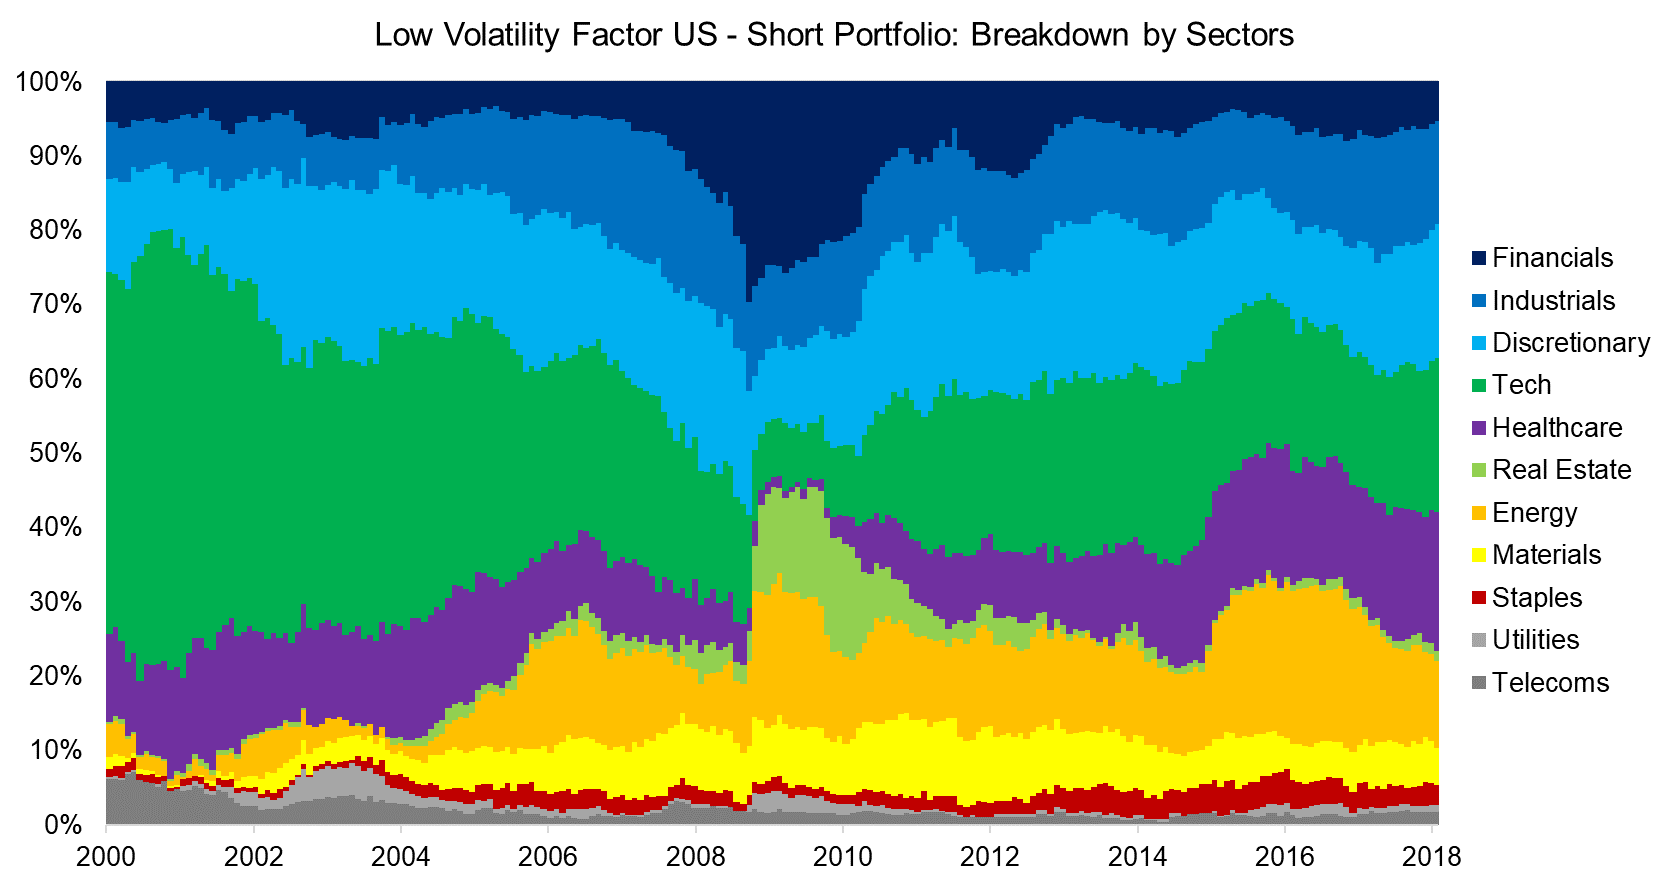 Low Volatility Factor US - Short Portfolio Breakdown by Sectors